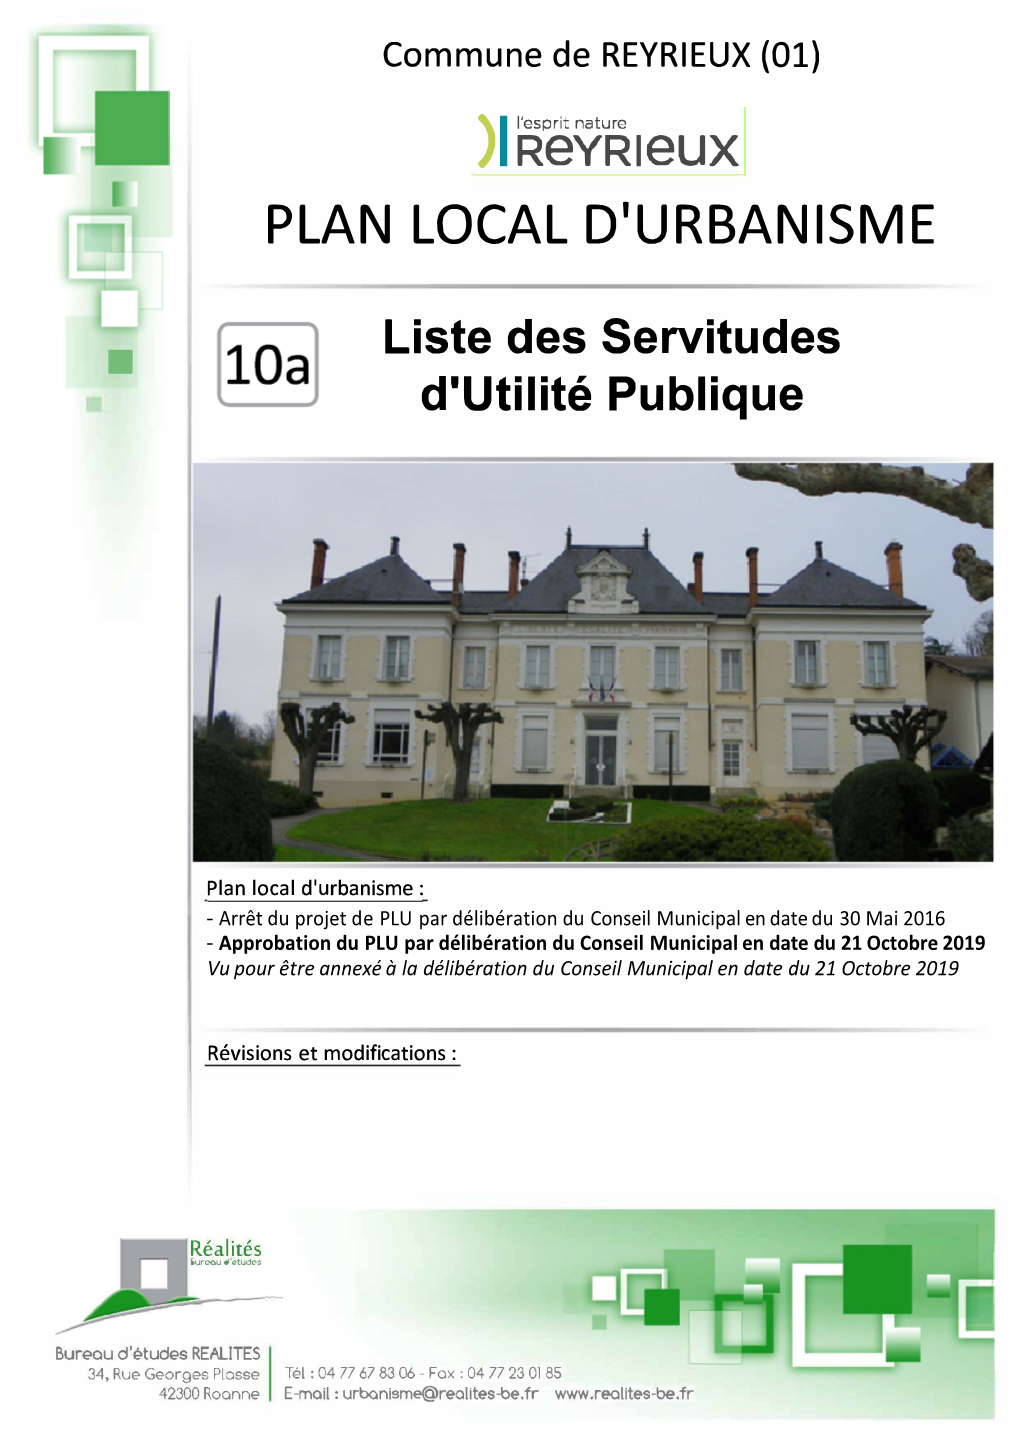 )Irèyr1eux PLAN LOCAL D'urbanisme